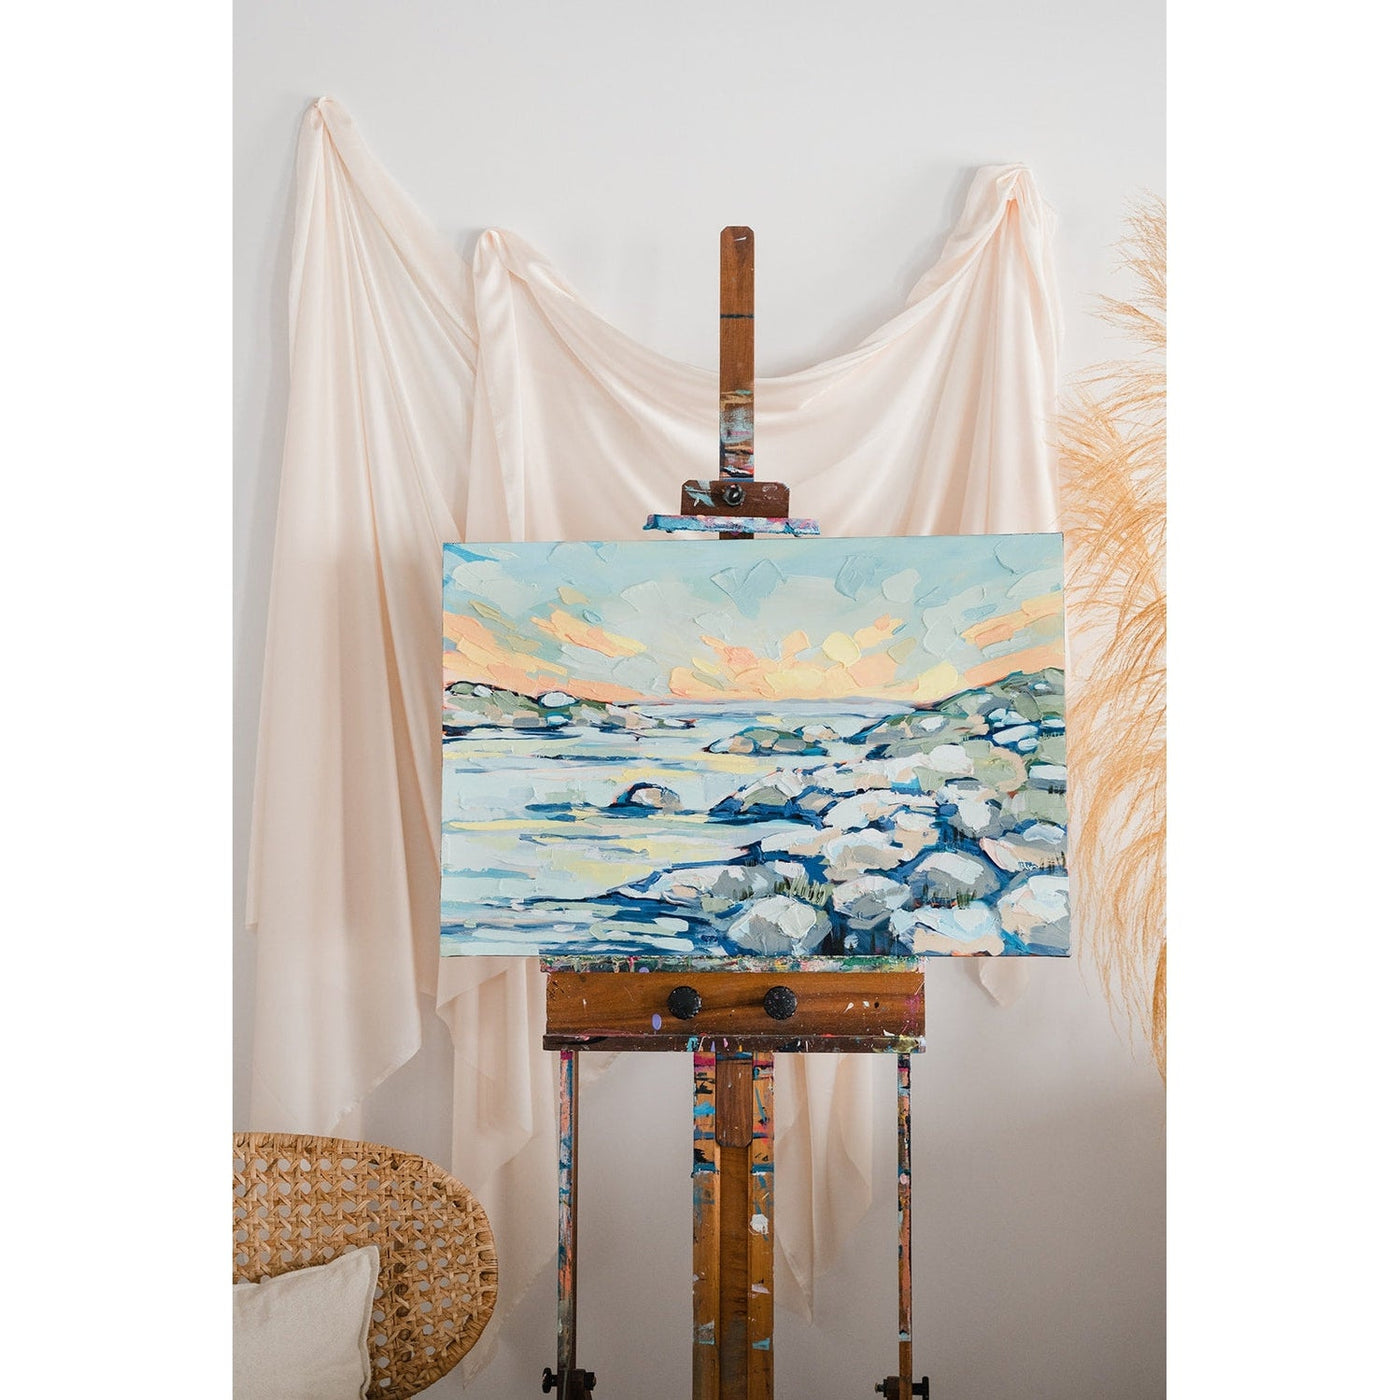 Polly's Cove, 36x24-Amy Dixon Art-Amy Dixon Art